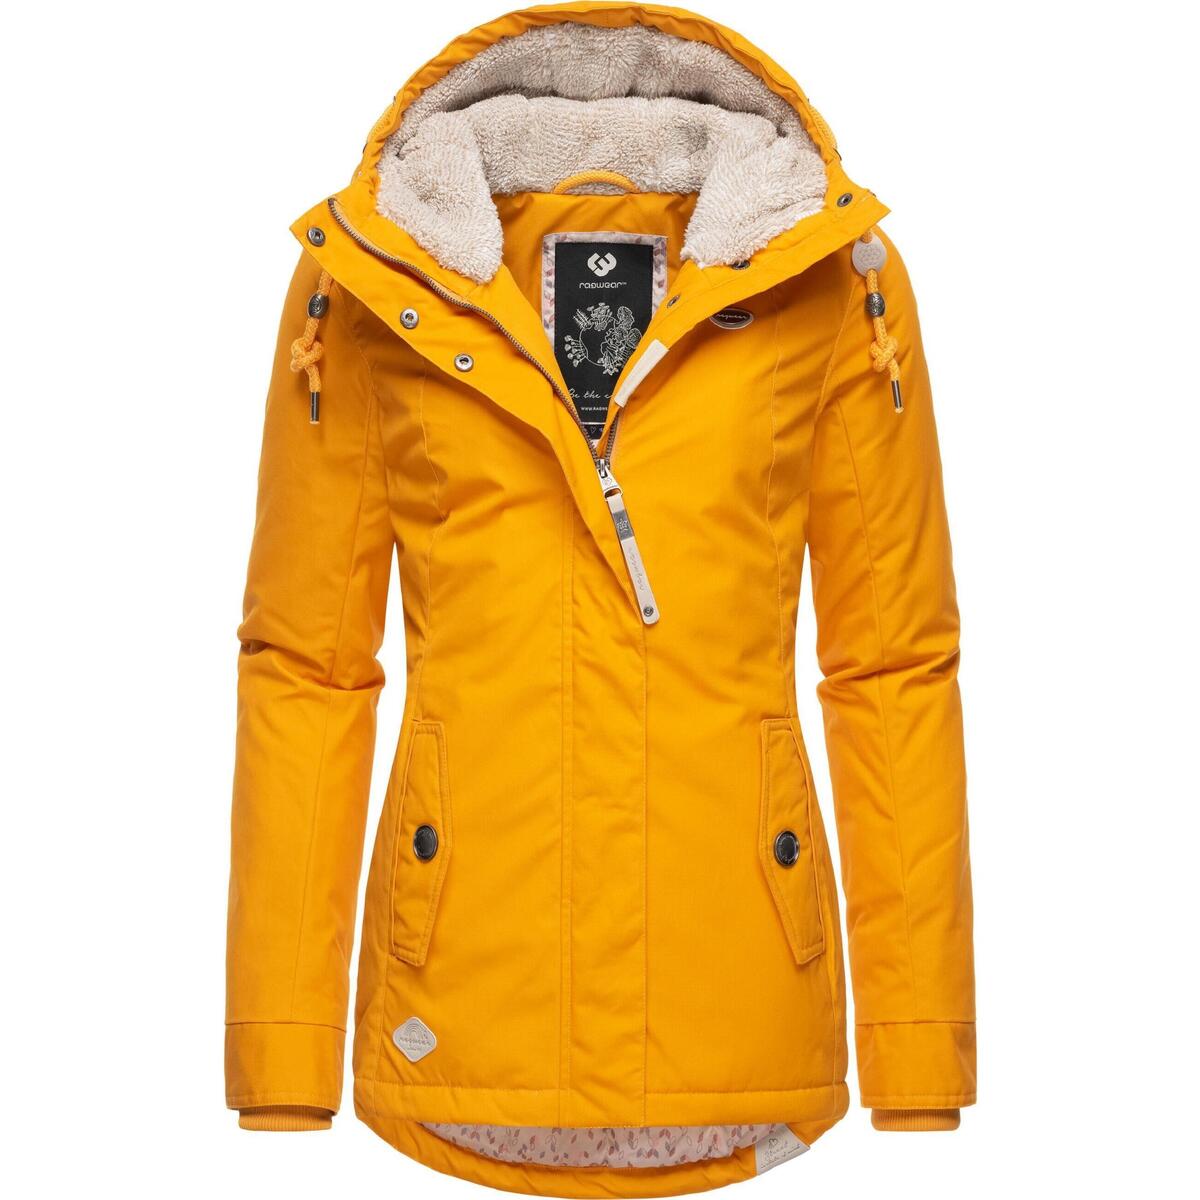 Ragwear Winterjacke Monade 149,95 € Jacken Damen Gelb - Kleidung